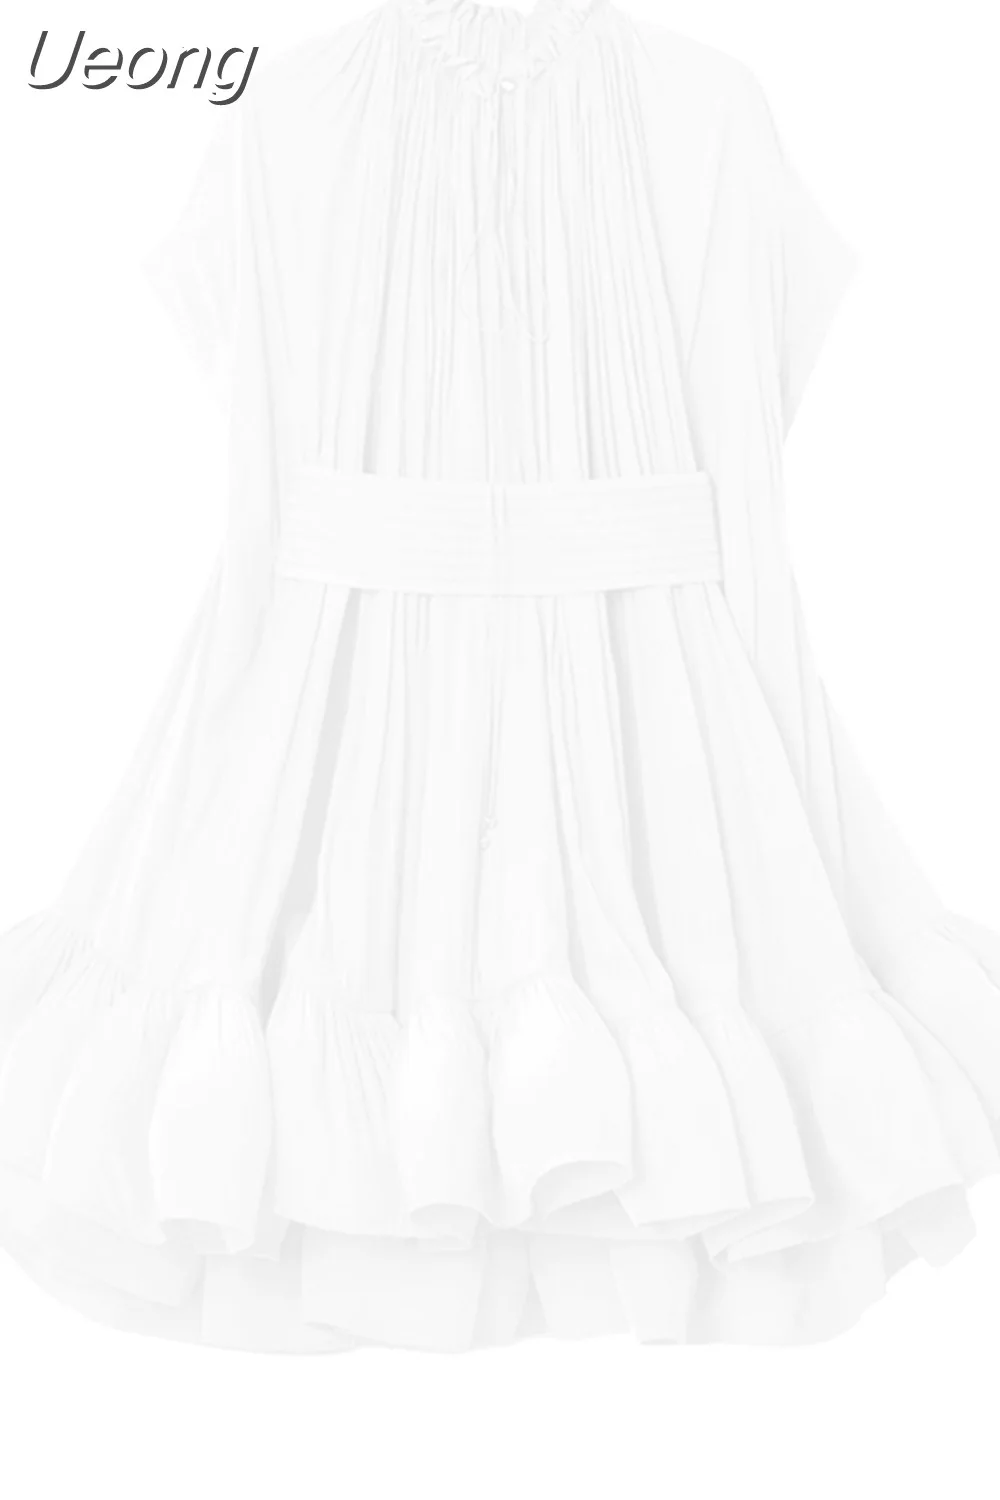 Ueong Asymmetrical Solid Mini Dresses For Women Round Neck Short Sleeve High Waist Spliced Plieasted A Line Dress Female Summer